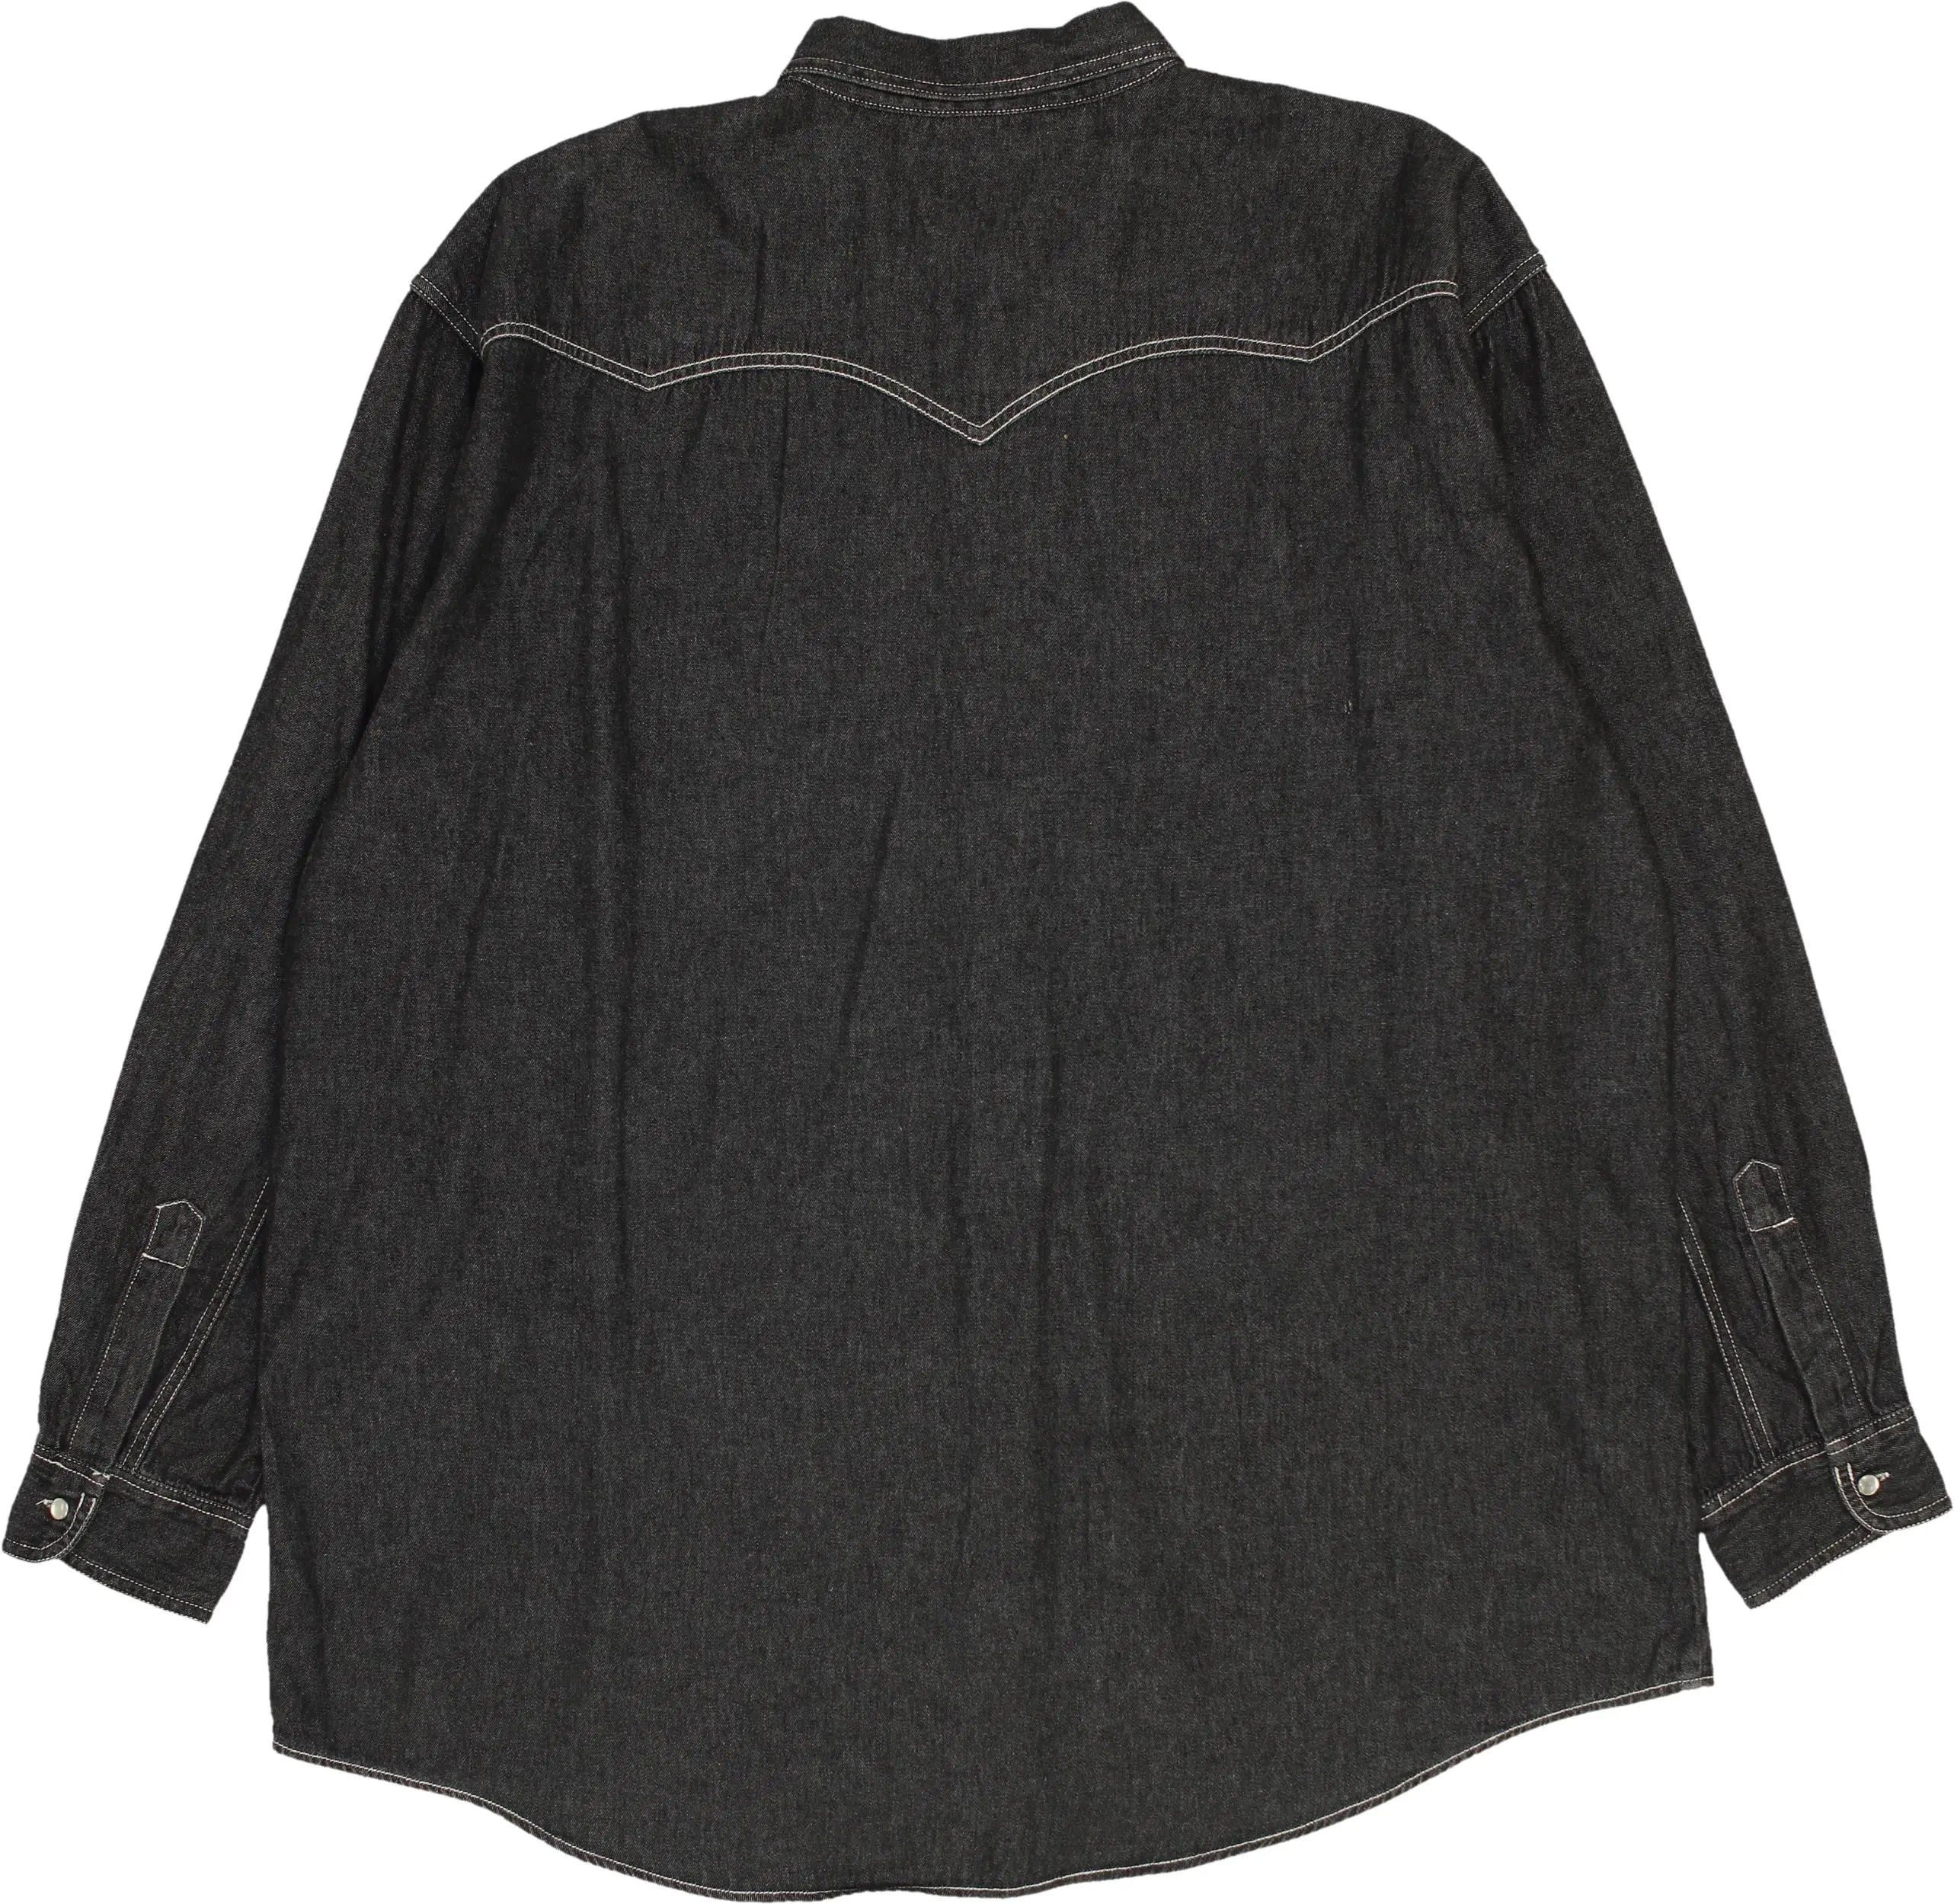 McDuncan - Denim Shirt- ThriftTale.com - Vintage and second handclothing